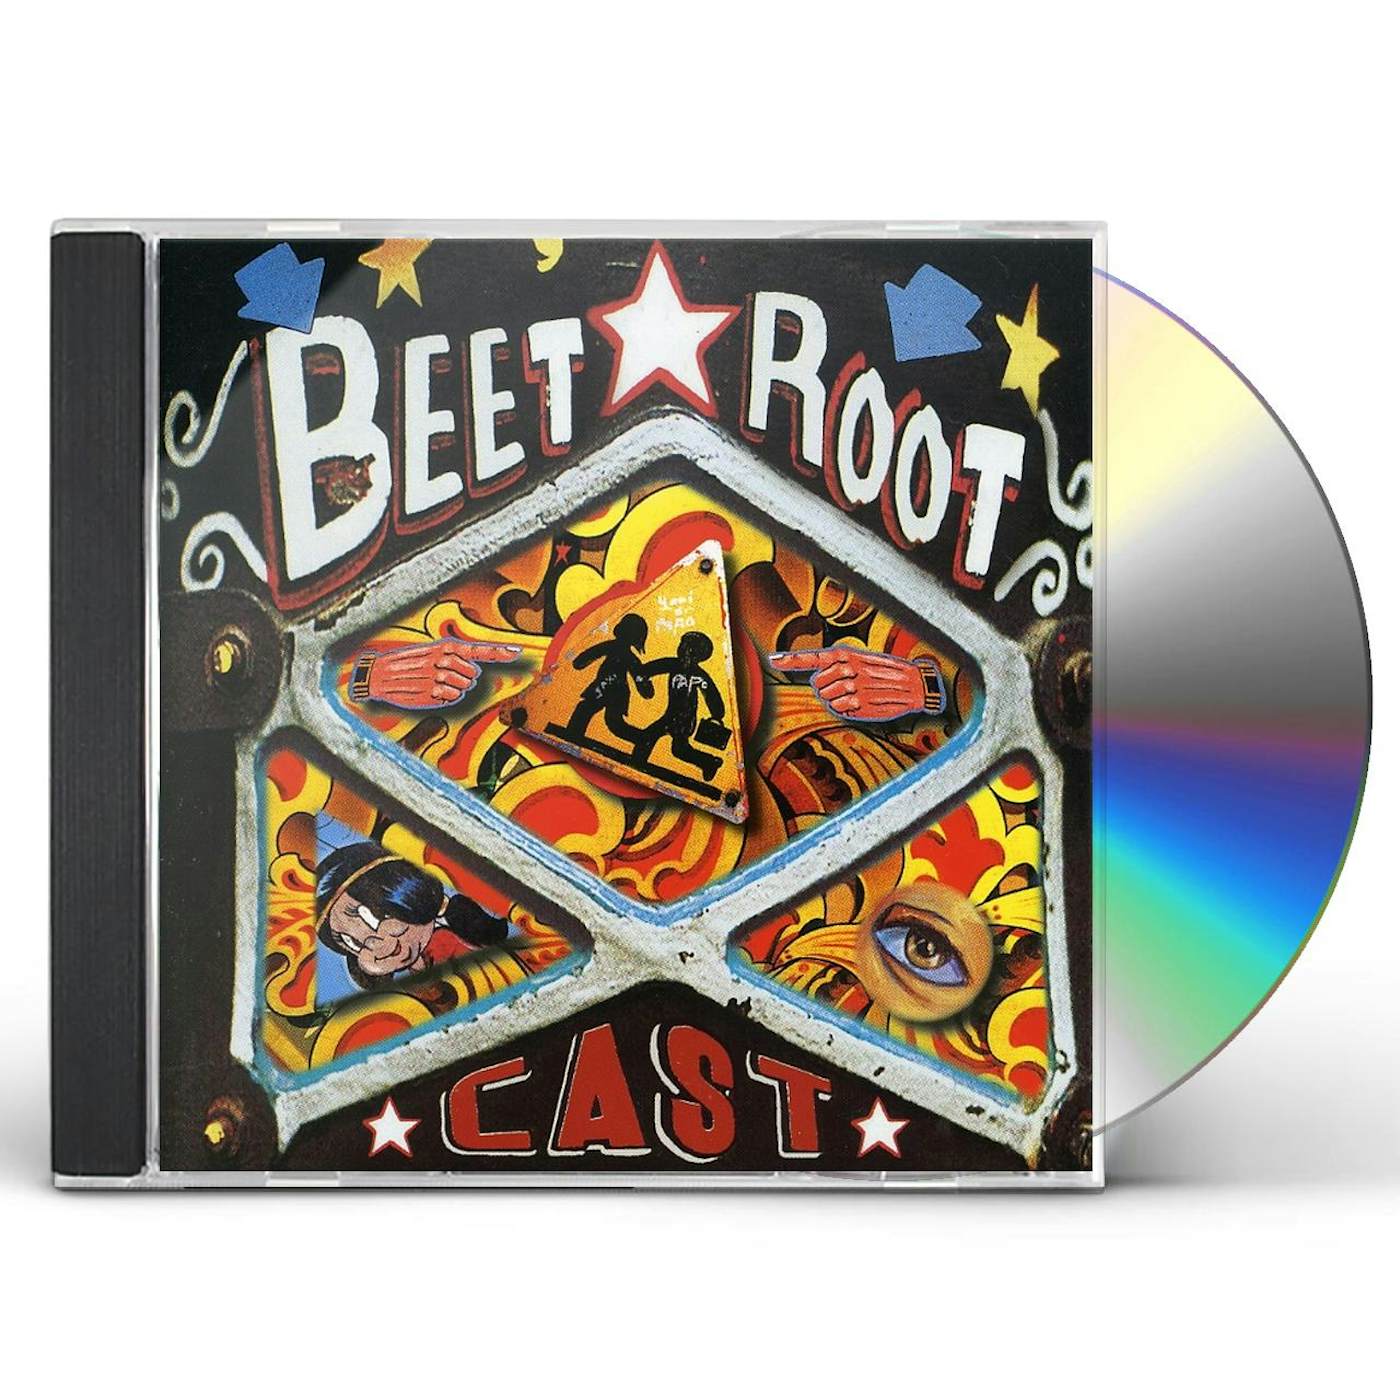 Cast BEETROOT CD